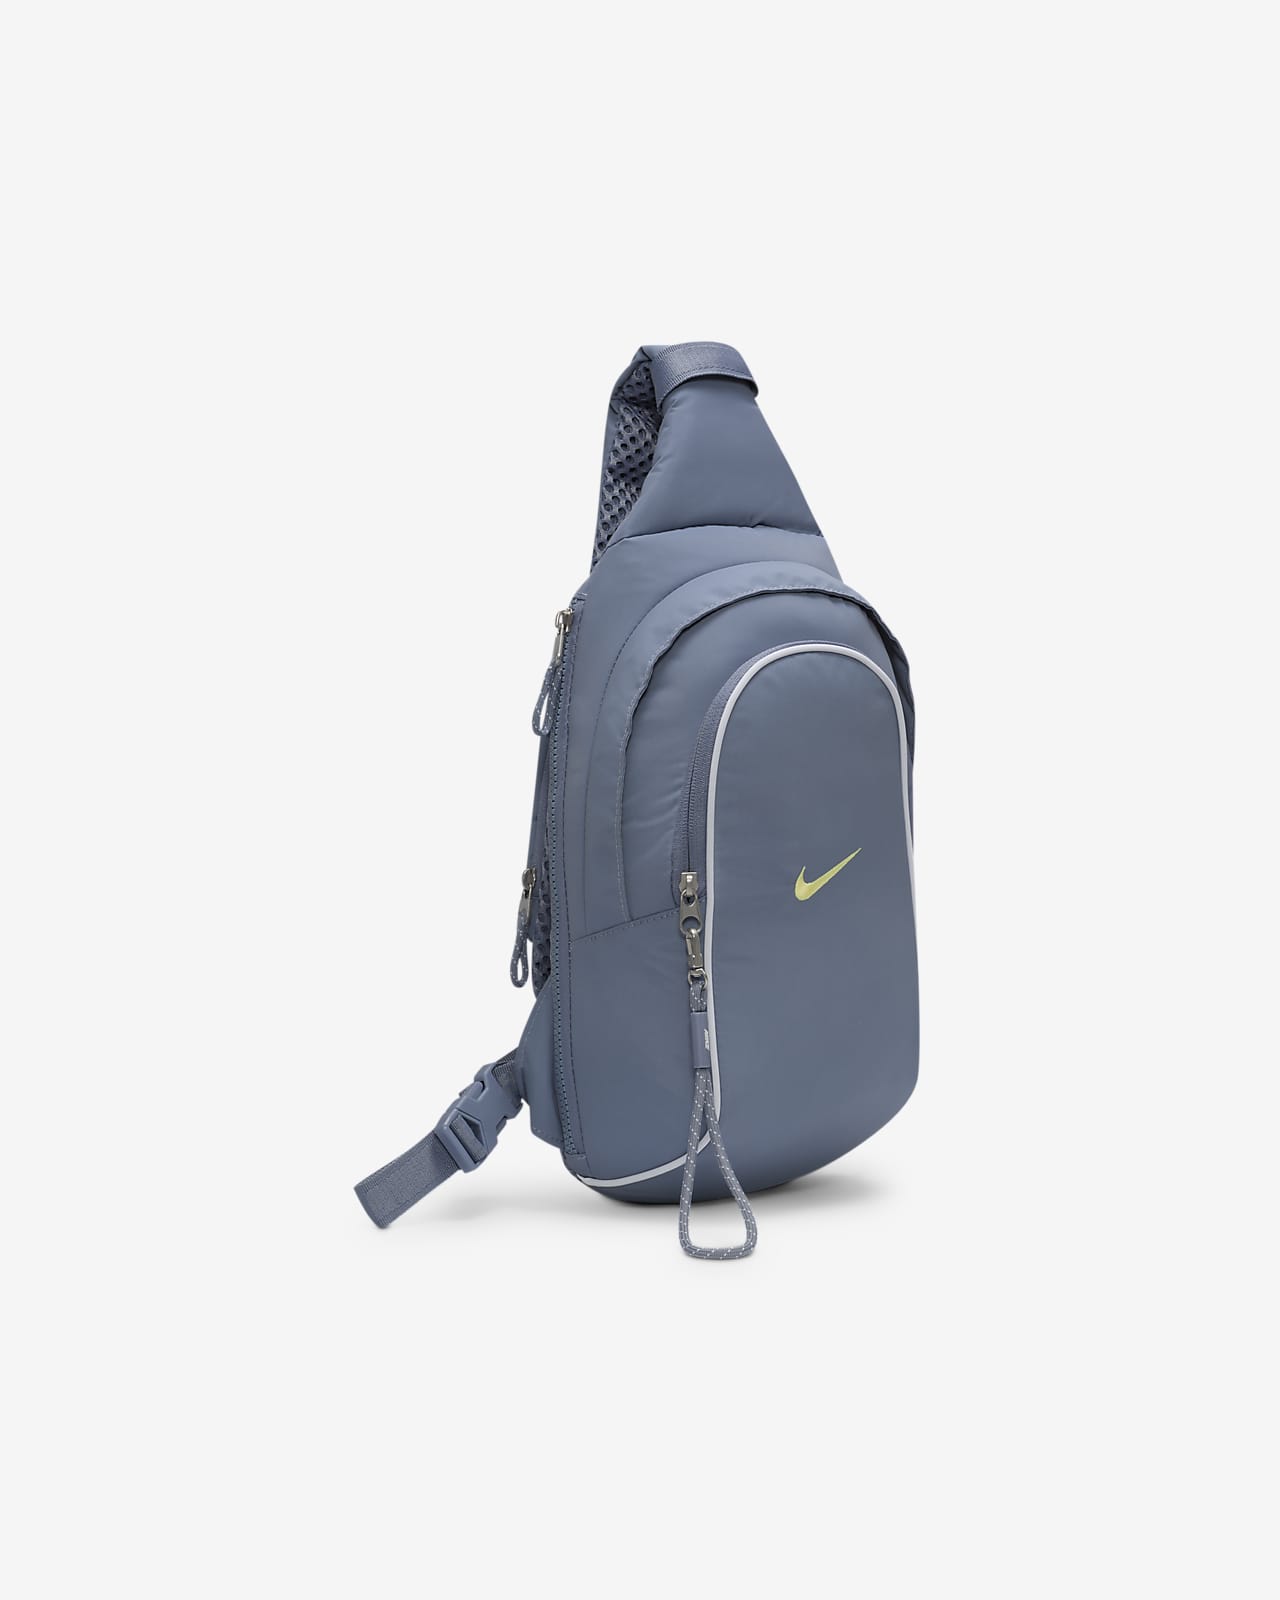 Nike Side Bag | Side bags, Bags, Man purse